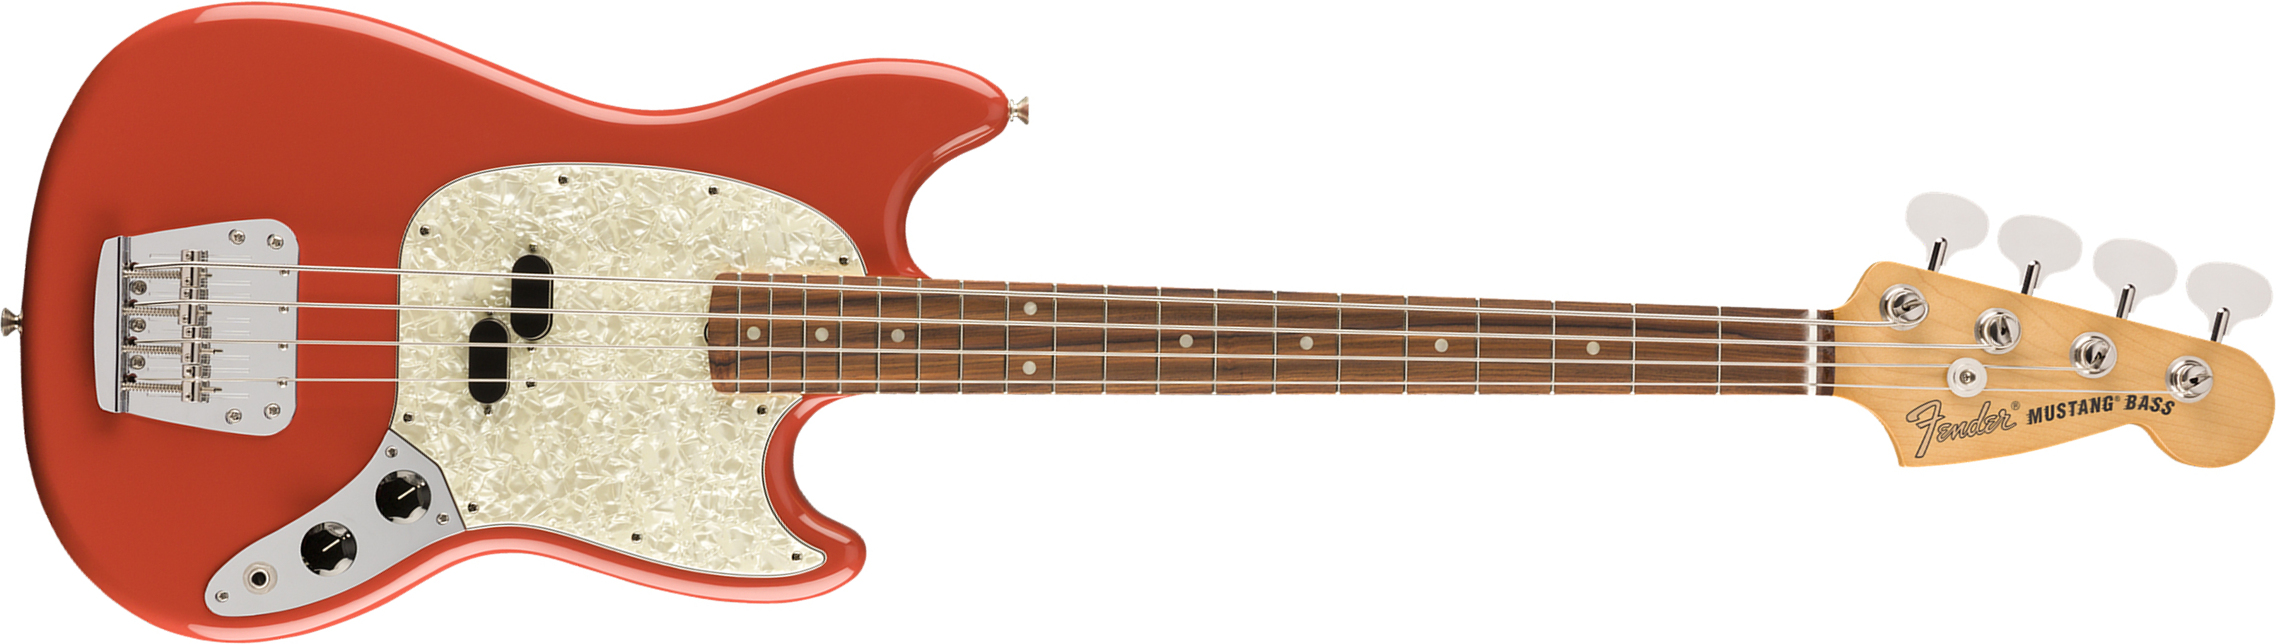 Fender Mustang Bass 60s Vintera Vintage Mex Pf - Fiesta Red - Short scale elektrische bas - Main picture